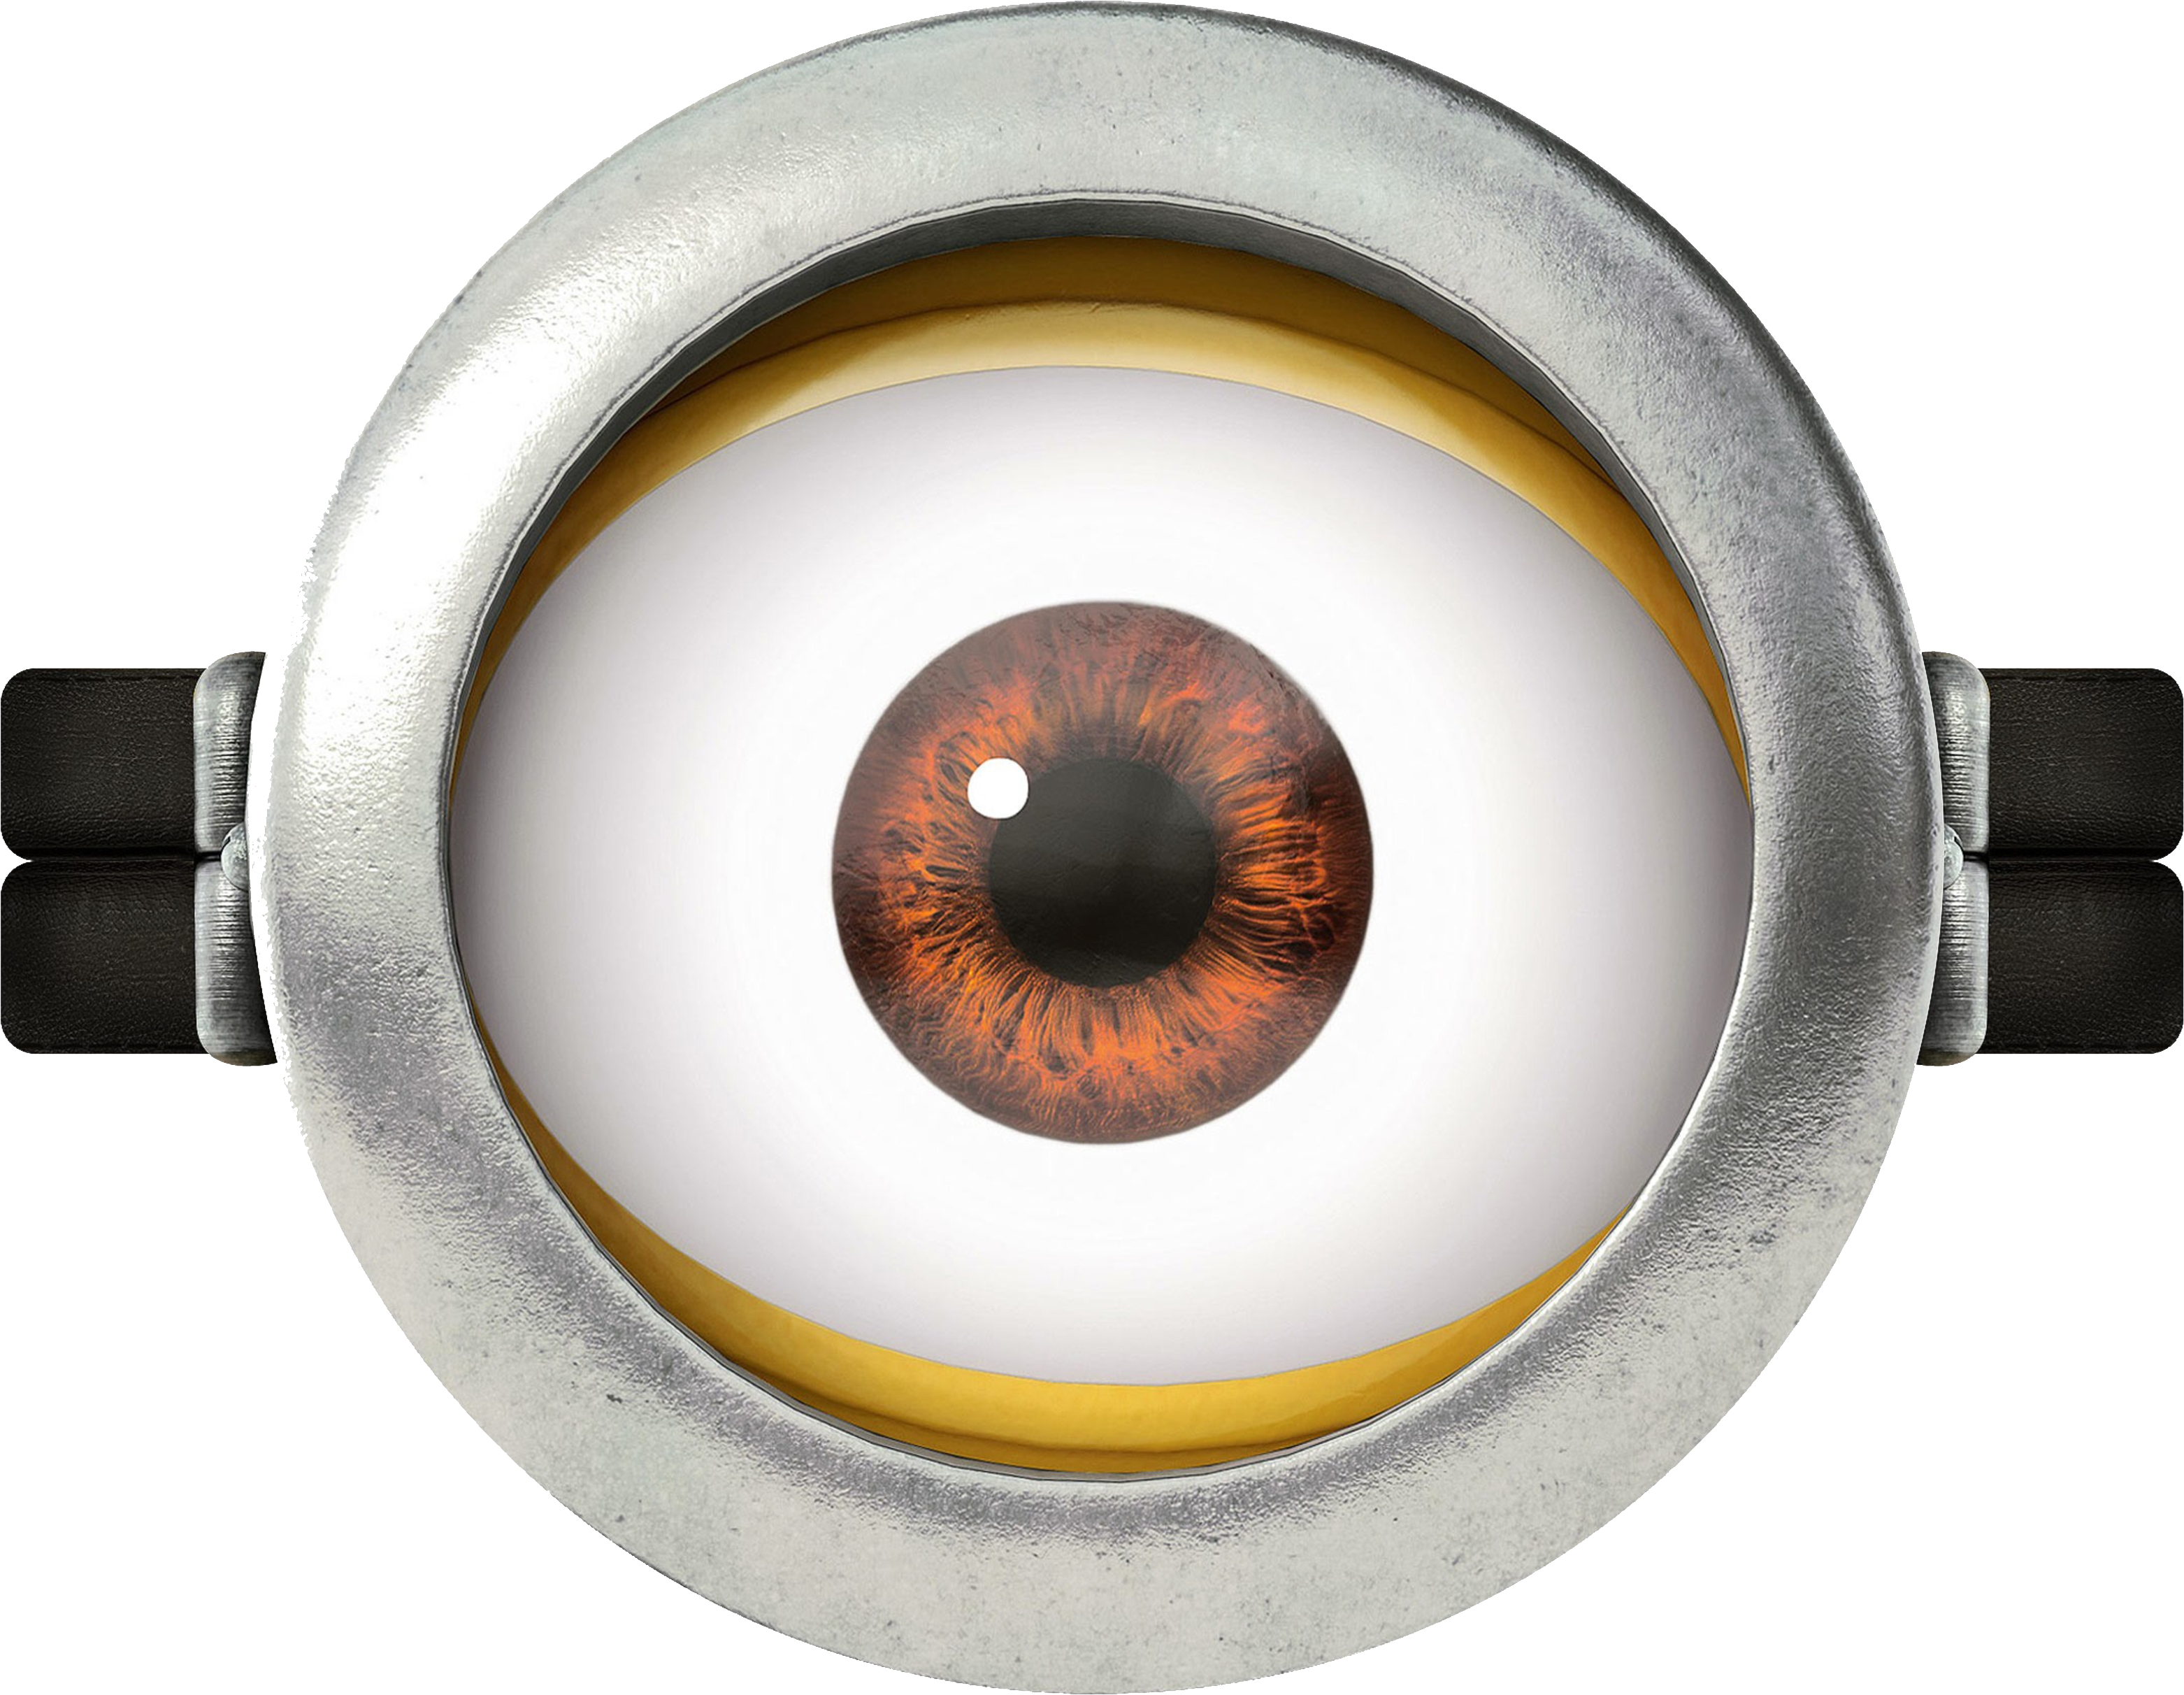 Download PNG image - Minion Eyes Transparent PNG 